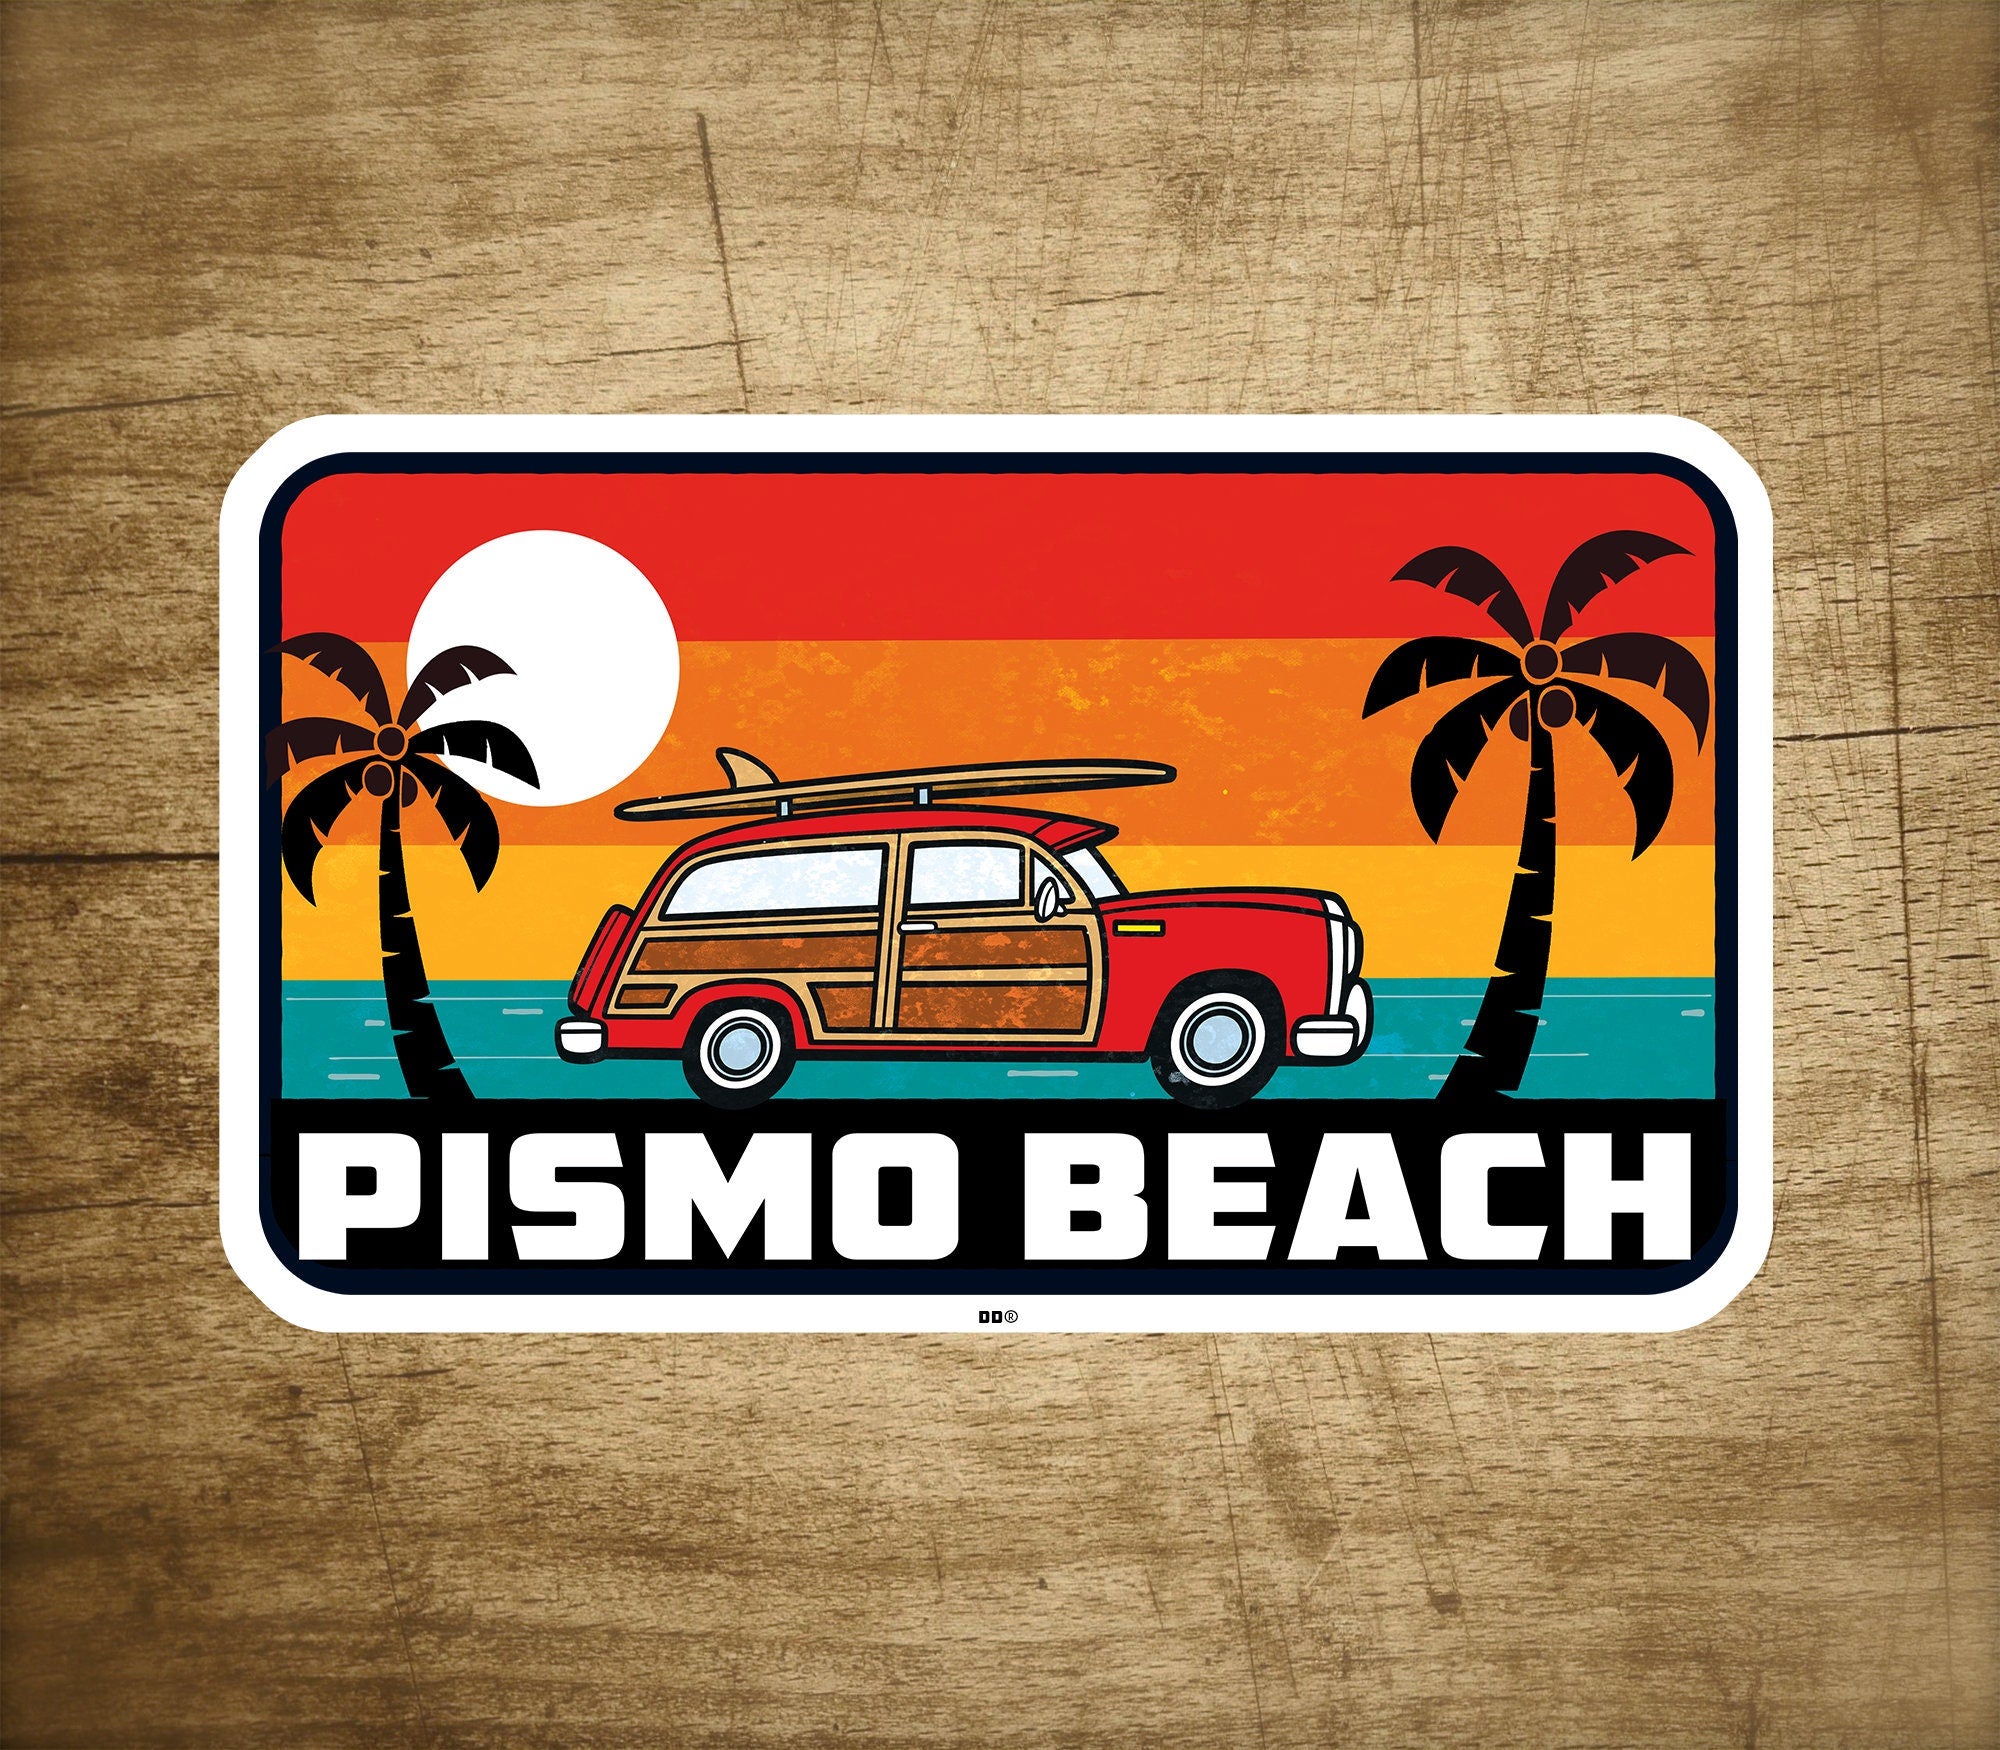 Pismo Beach California Decal Sticker 3.75" X 2.25" Surf Los Angeles Surfing